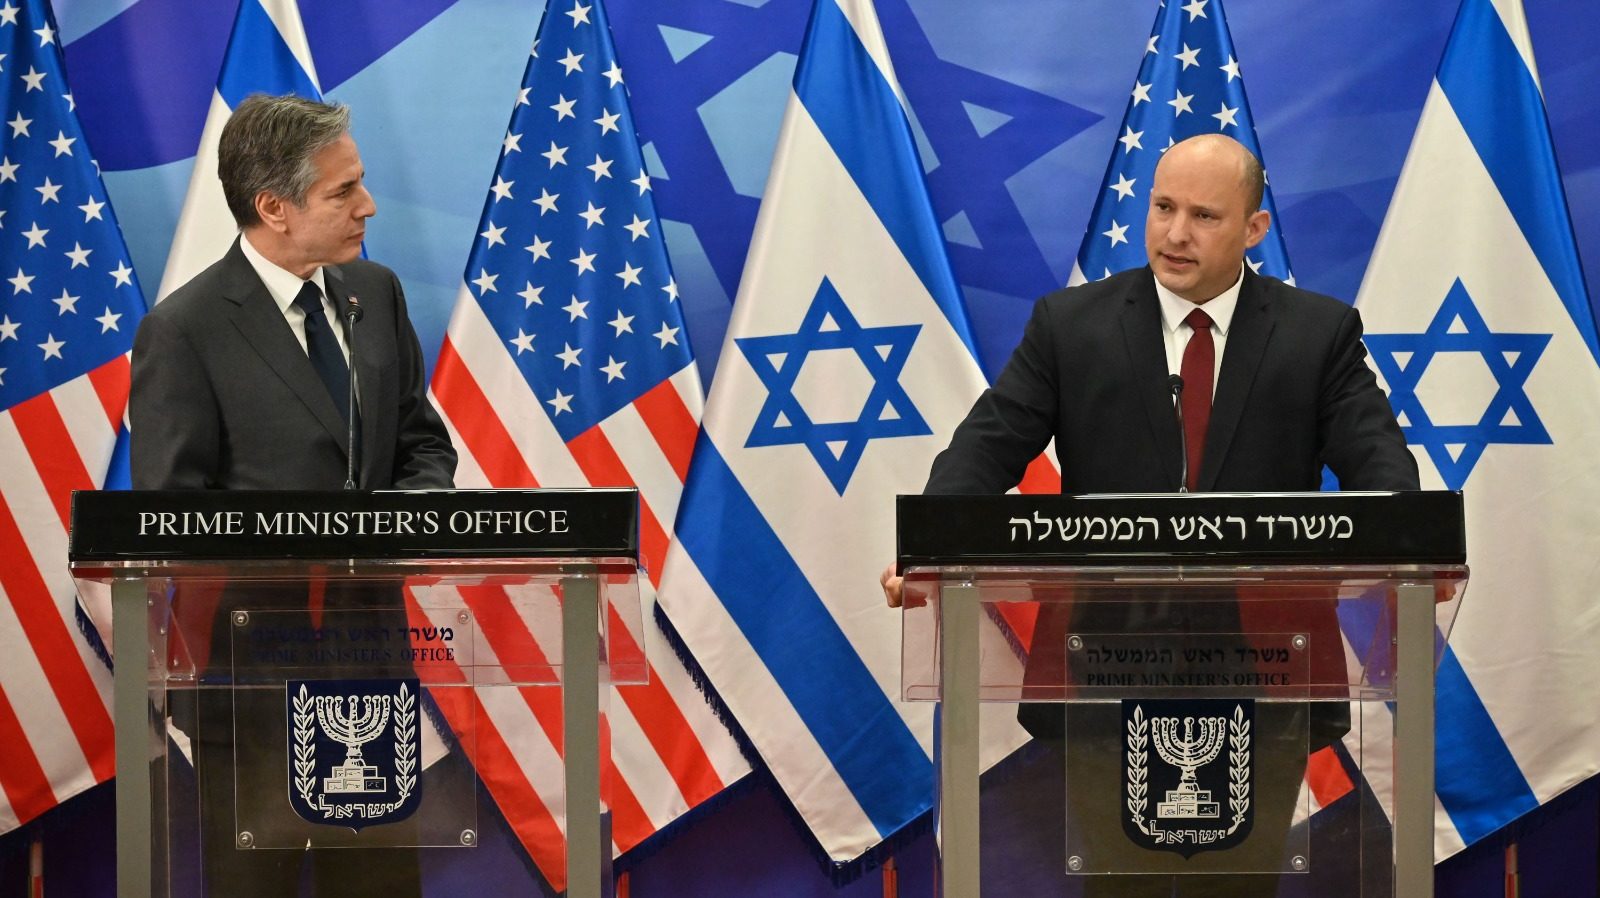 Blinken in Israel for Landmark Summit with Arab Ministers